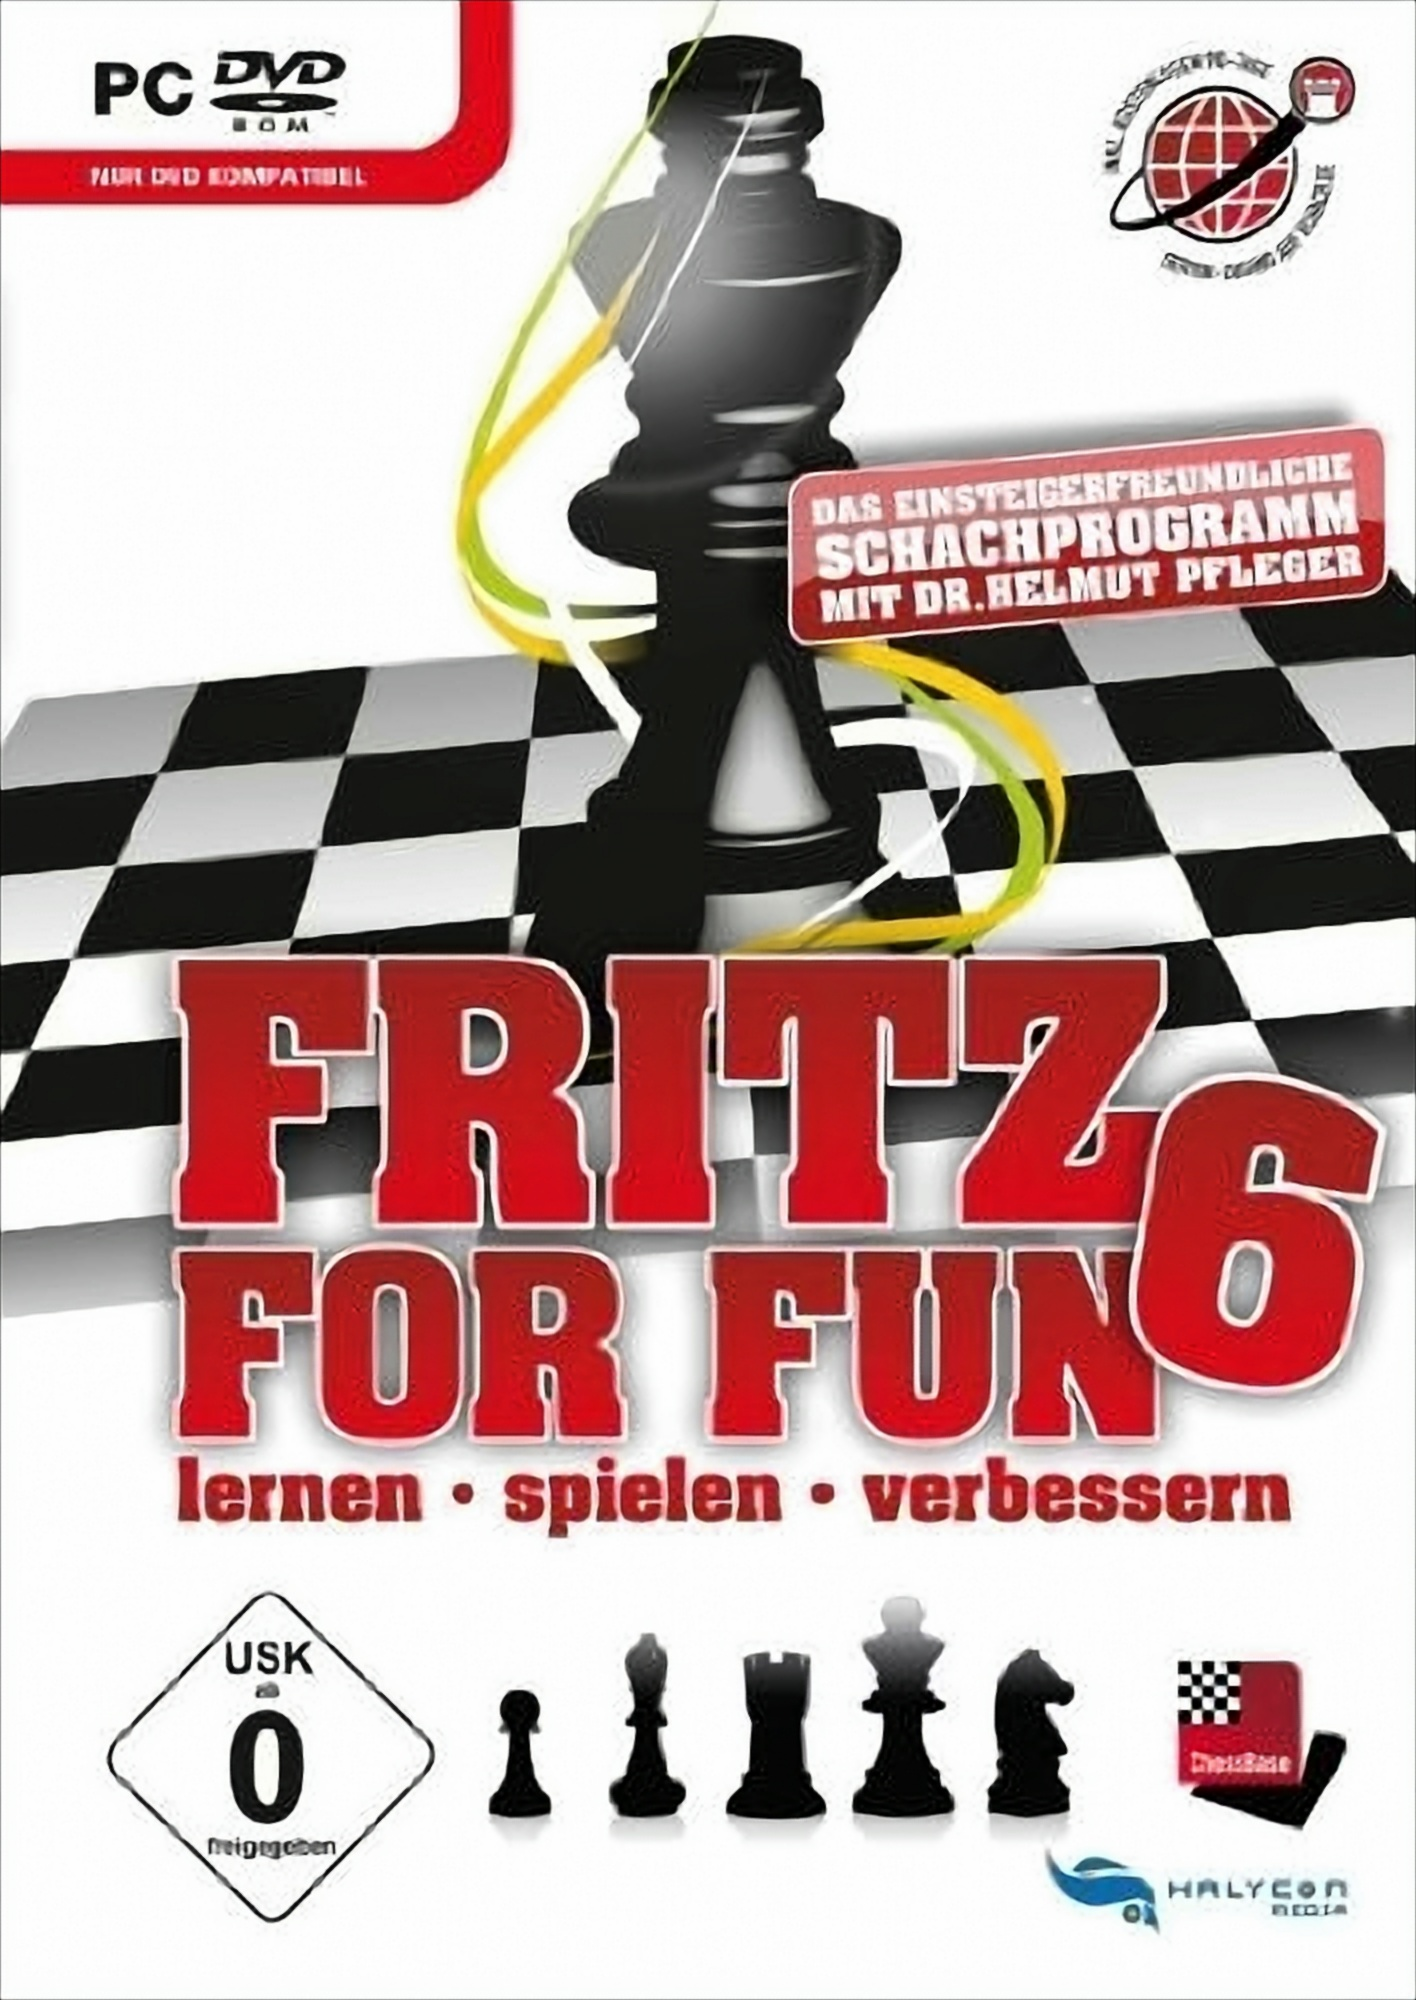 For Fritz - [PC] 6 Fun